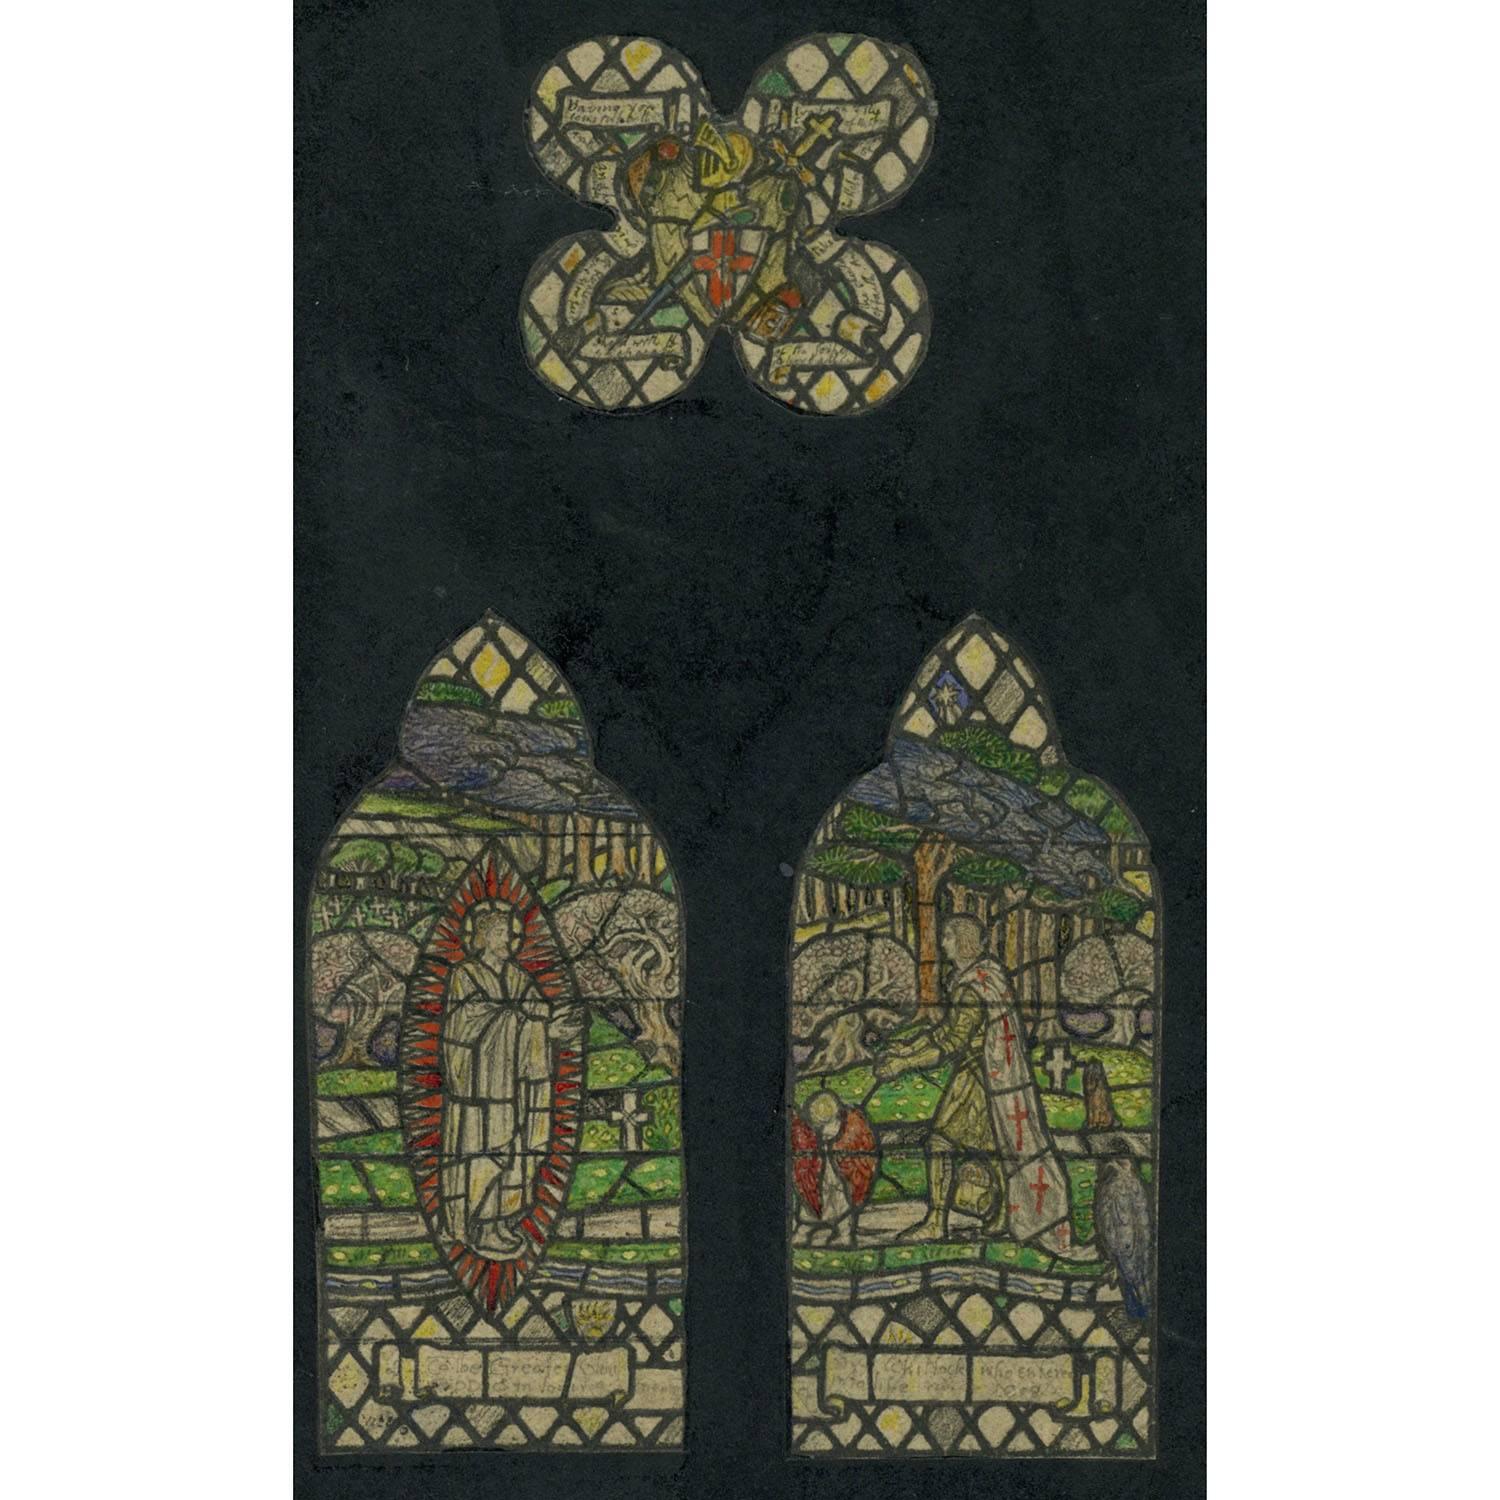 Florence Camm Landscape Art - Arthurian British Stained Glass Window Design II c. 1900 TW Camm - King Arthur